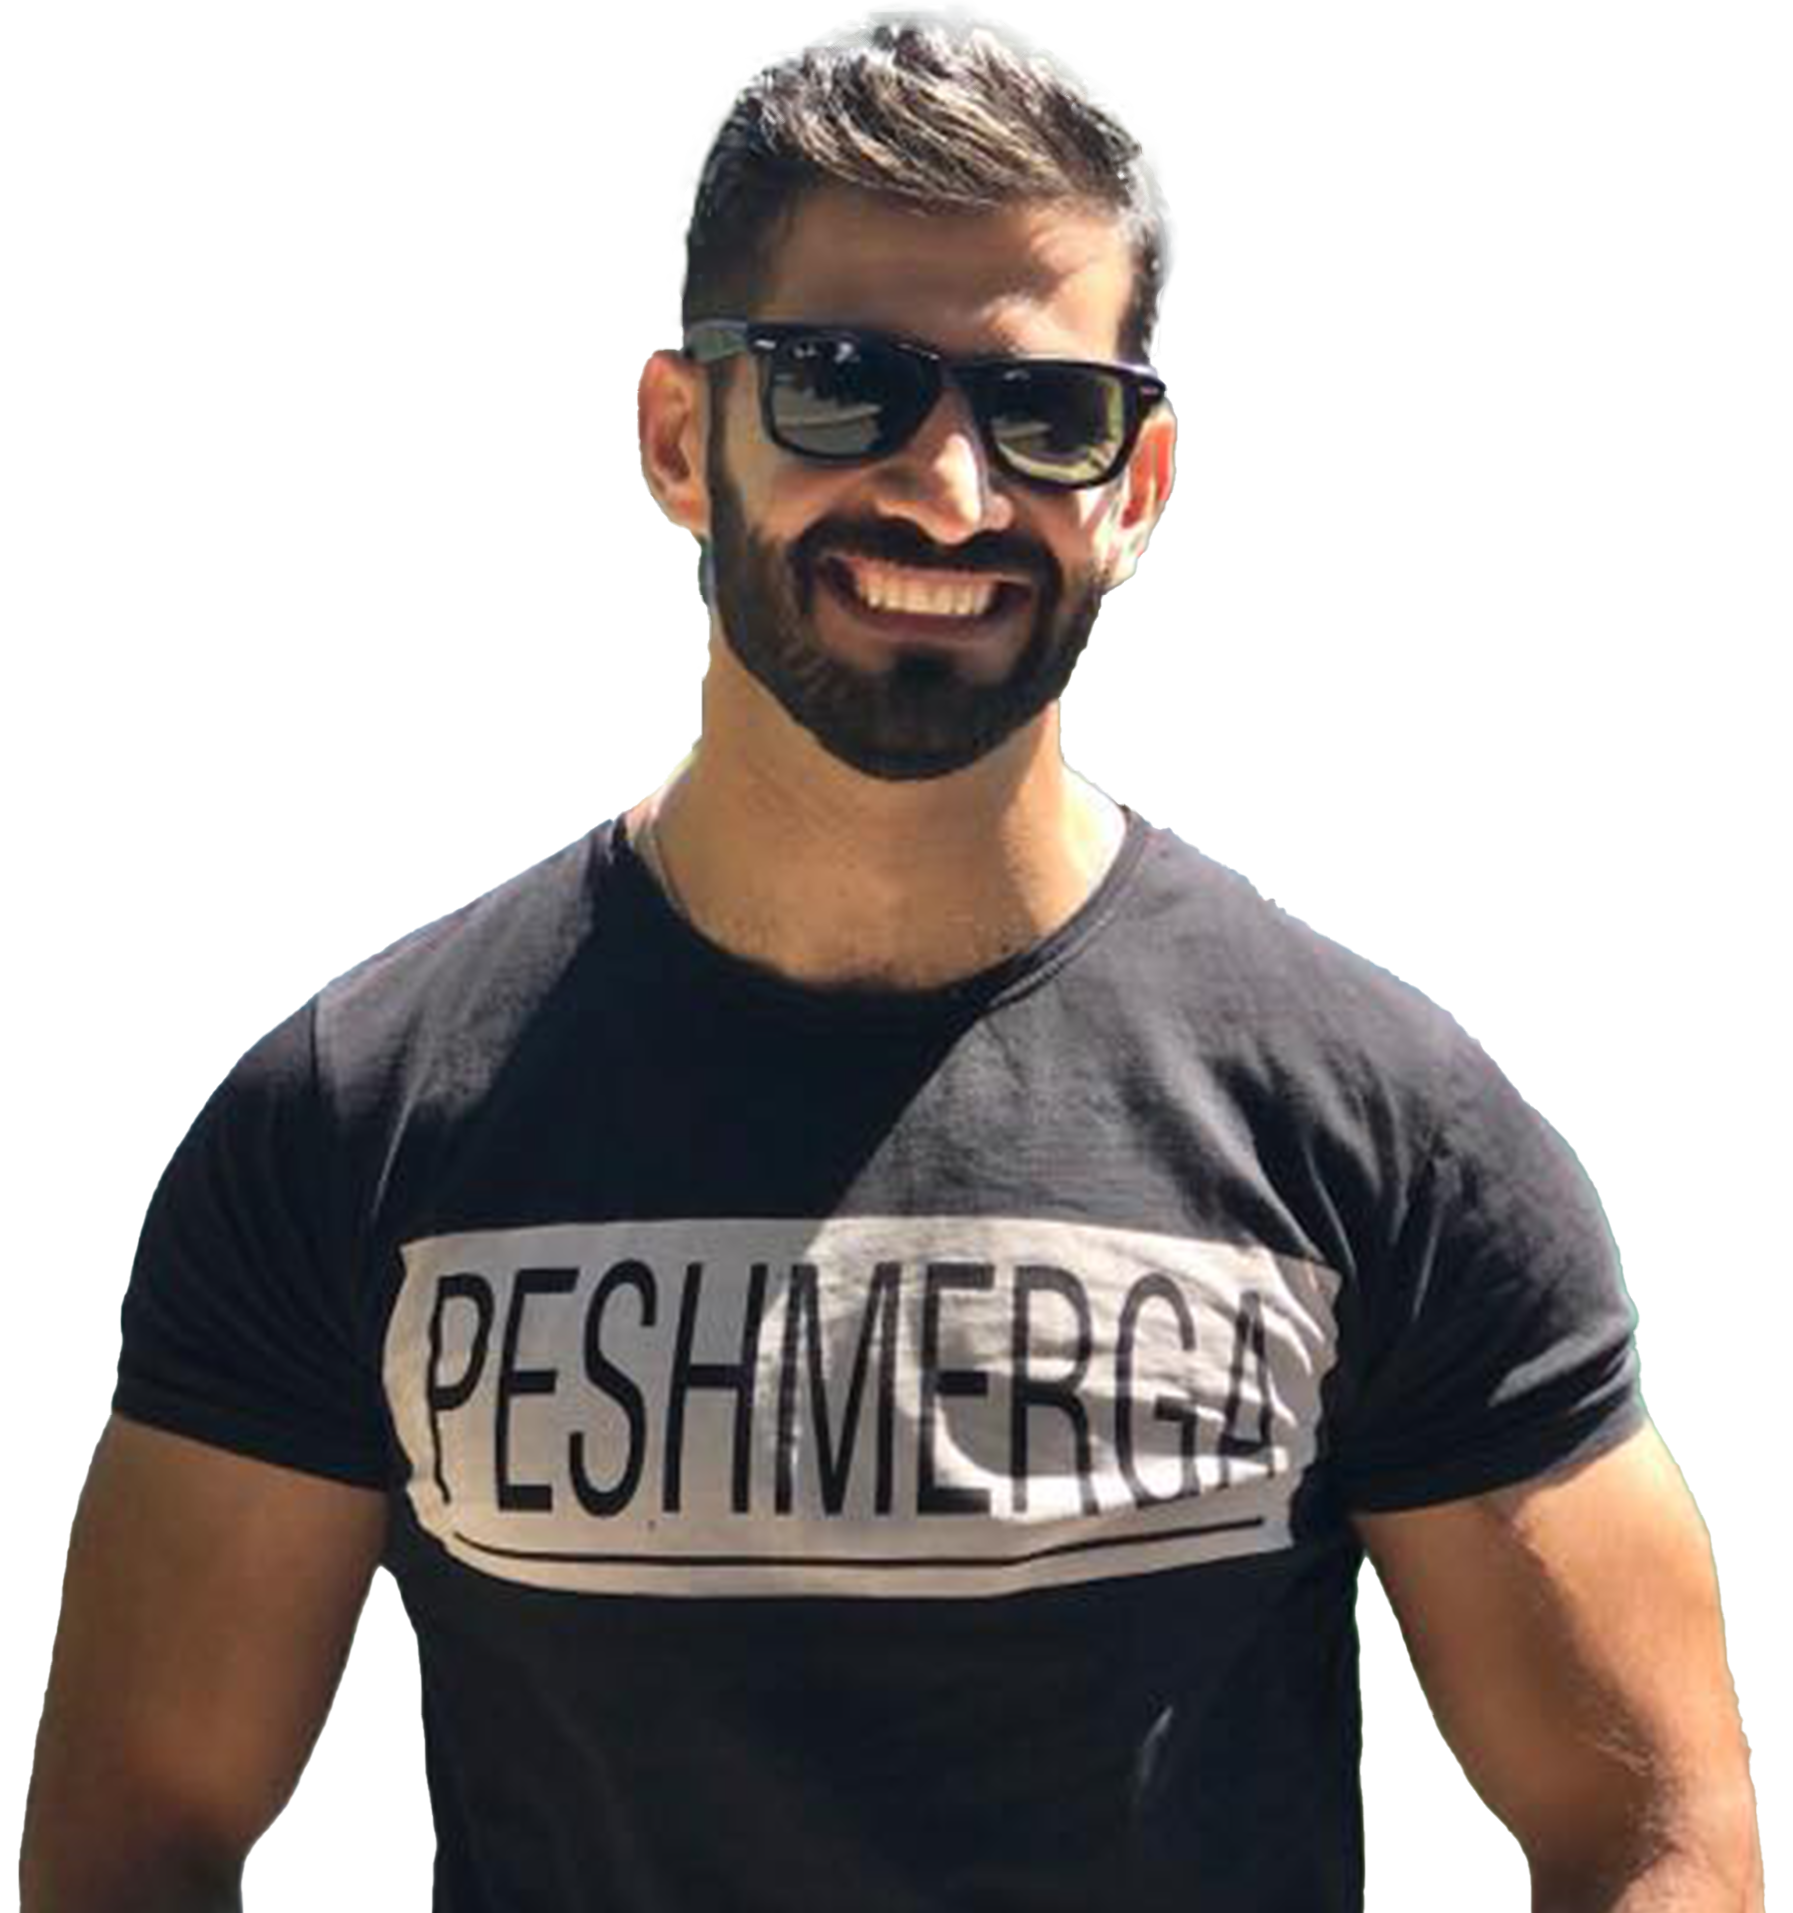 A man wearing sunglasses and a black t-shirt that says peshmerga